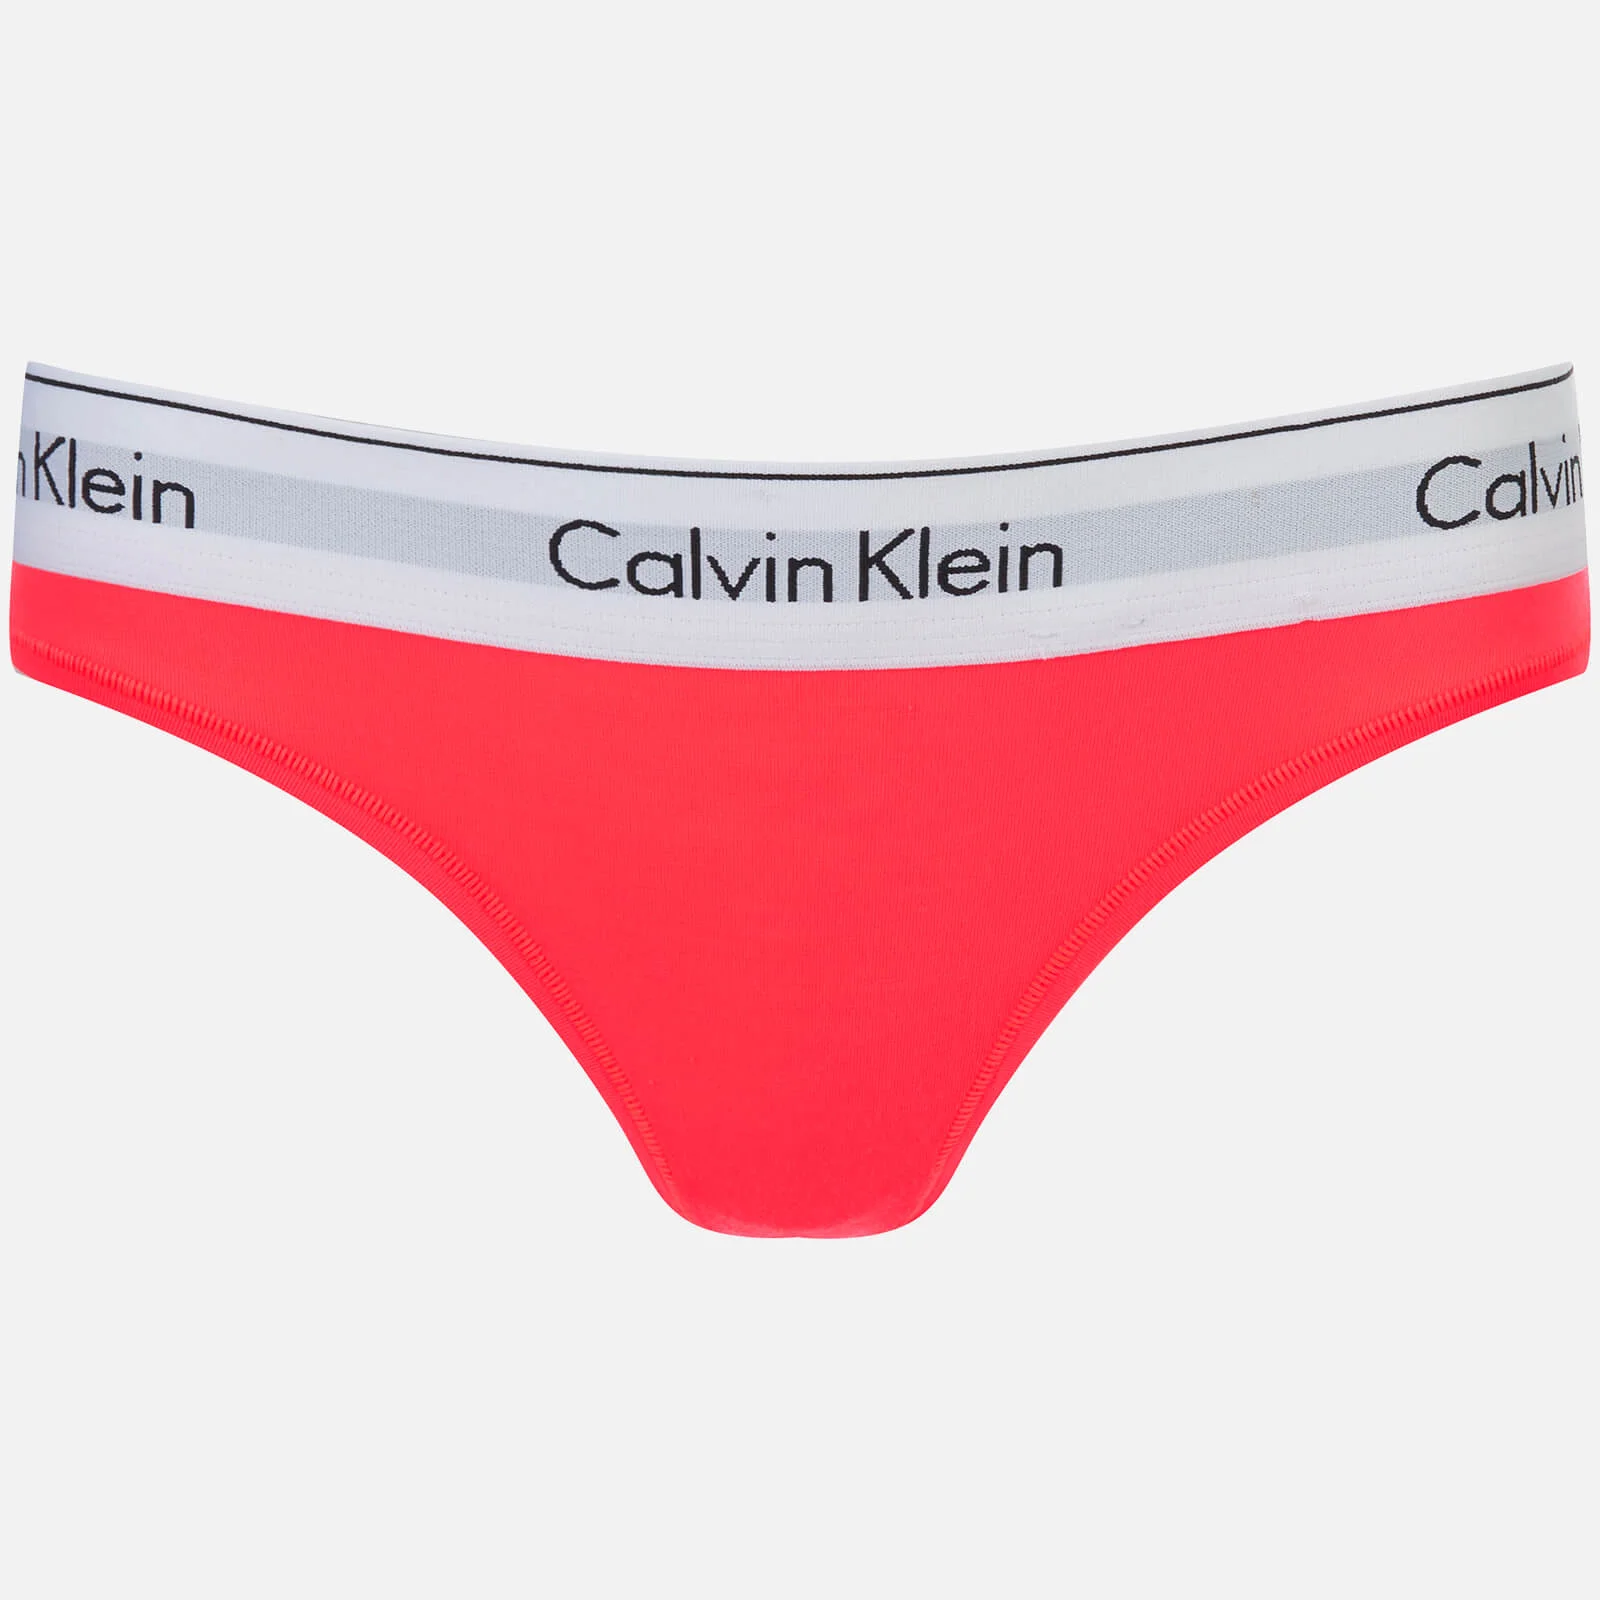 Calvin Klein Women's Modern Cotton Thong - Bright Nectar Image 1